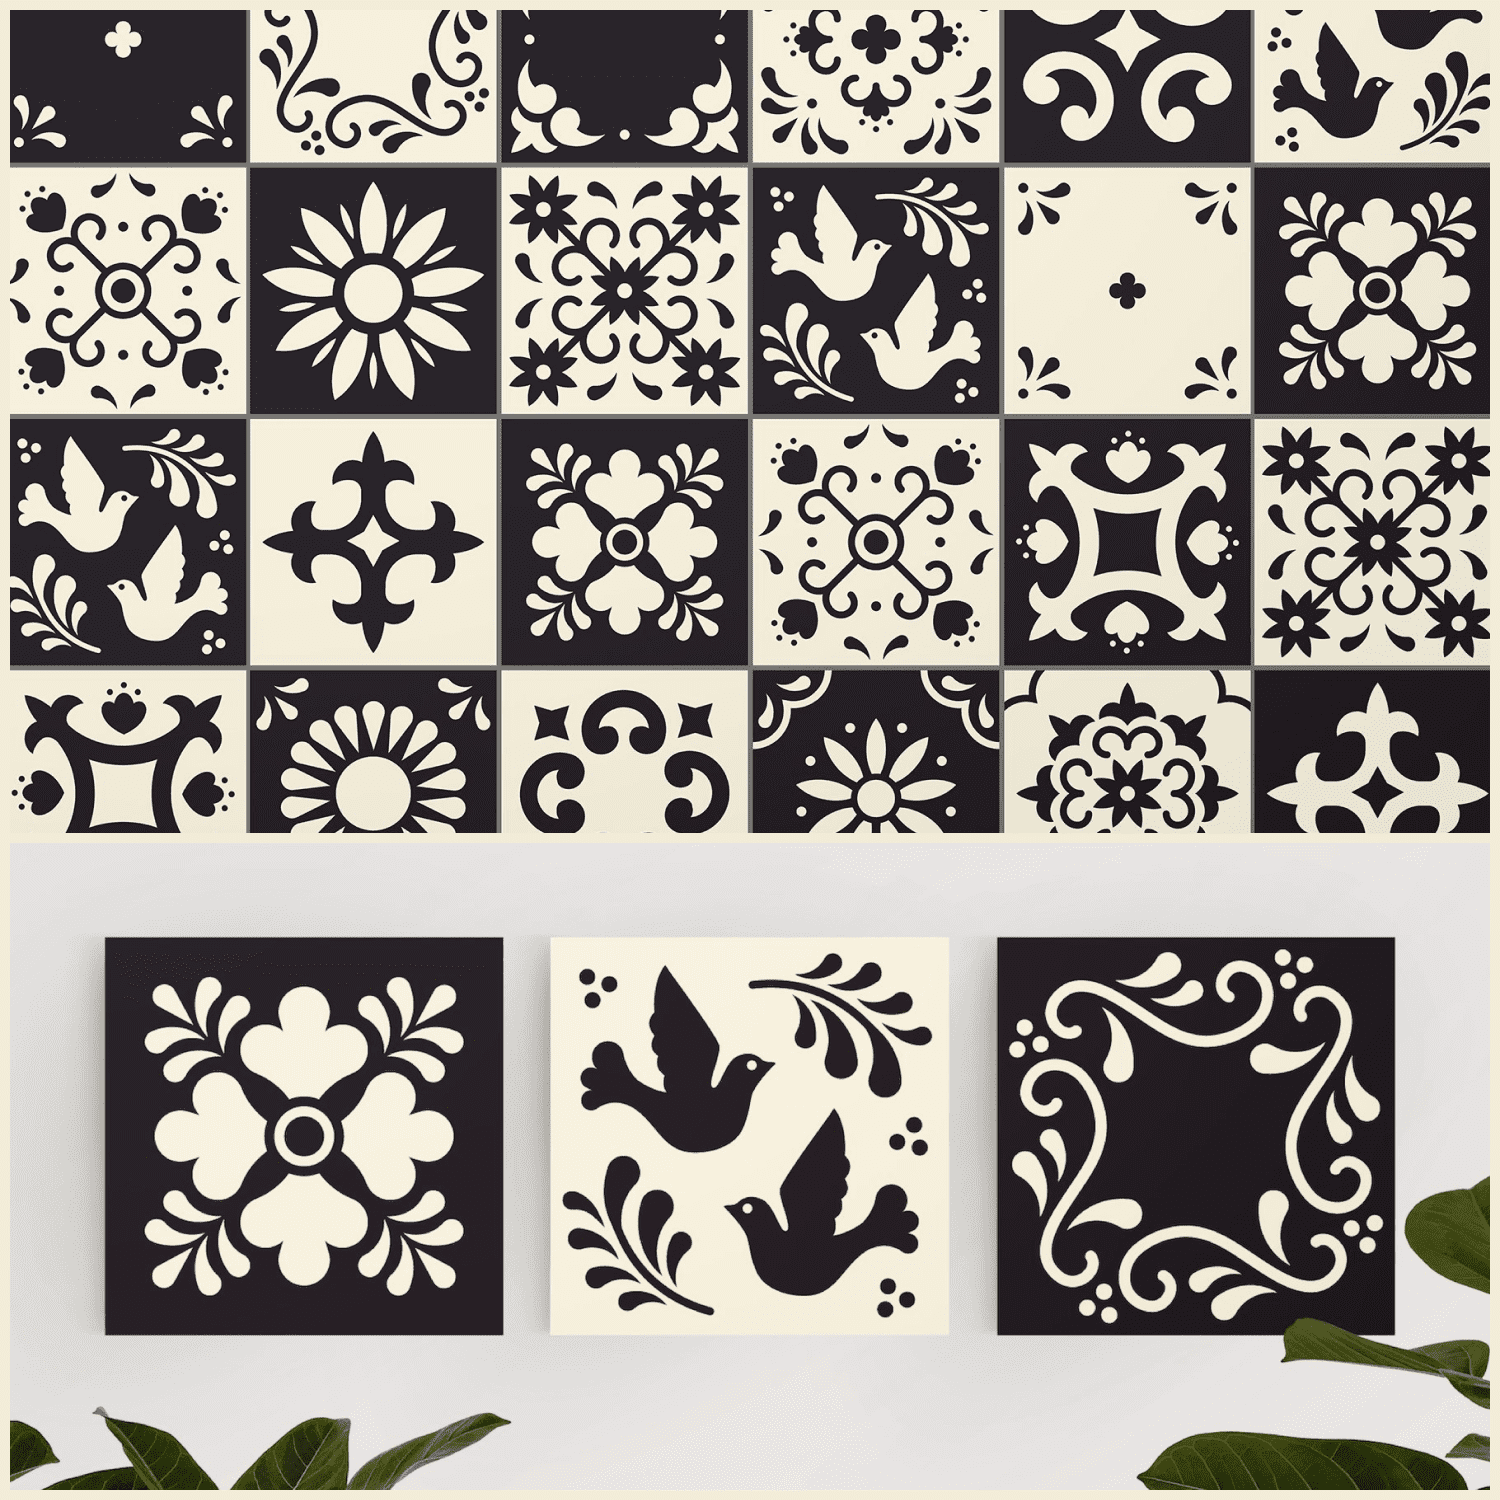 Mexican Talavera Tiles Patterns Set cover.